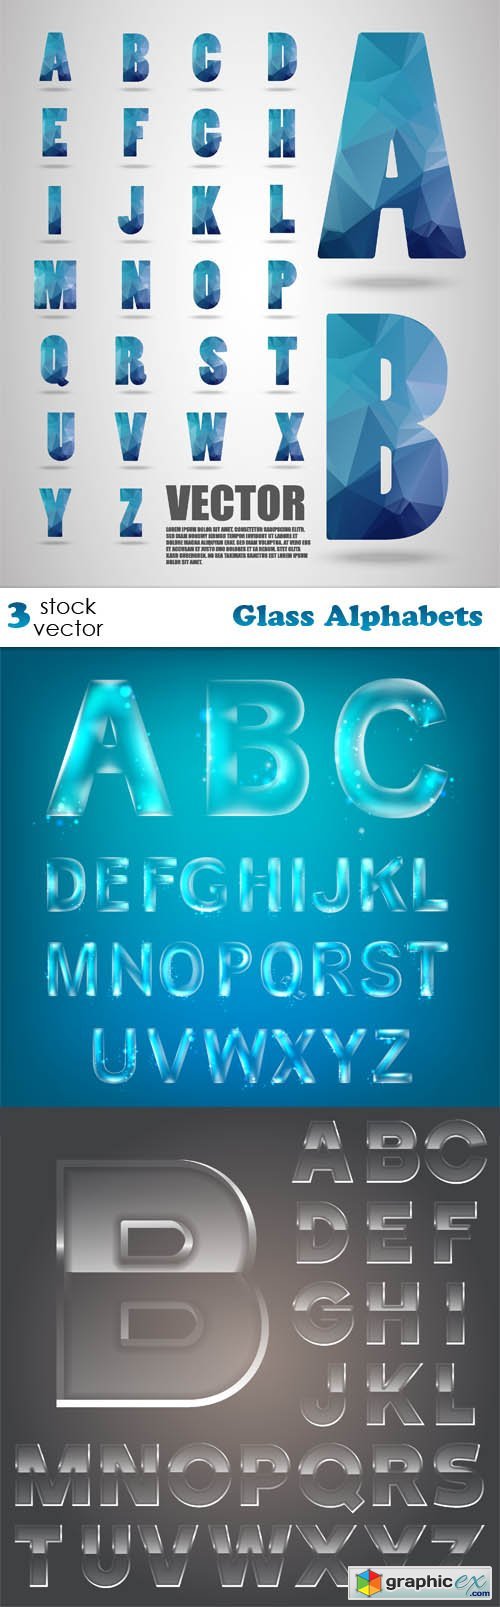 Glass Alphabets